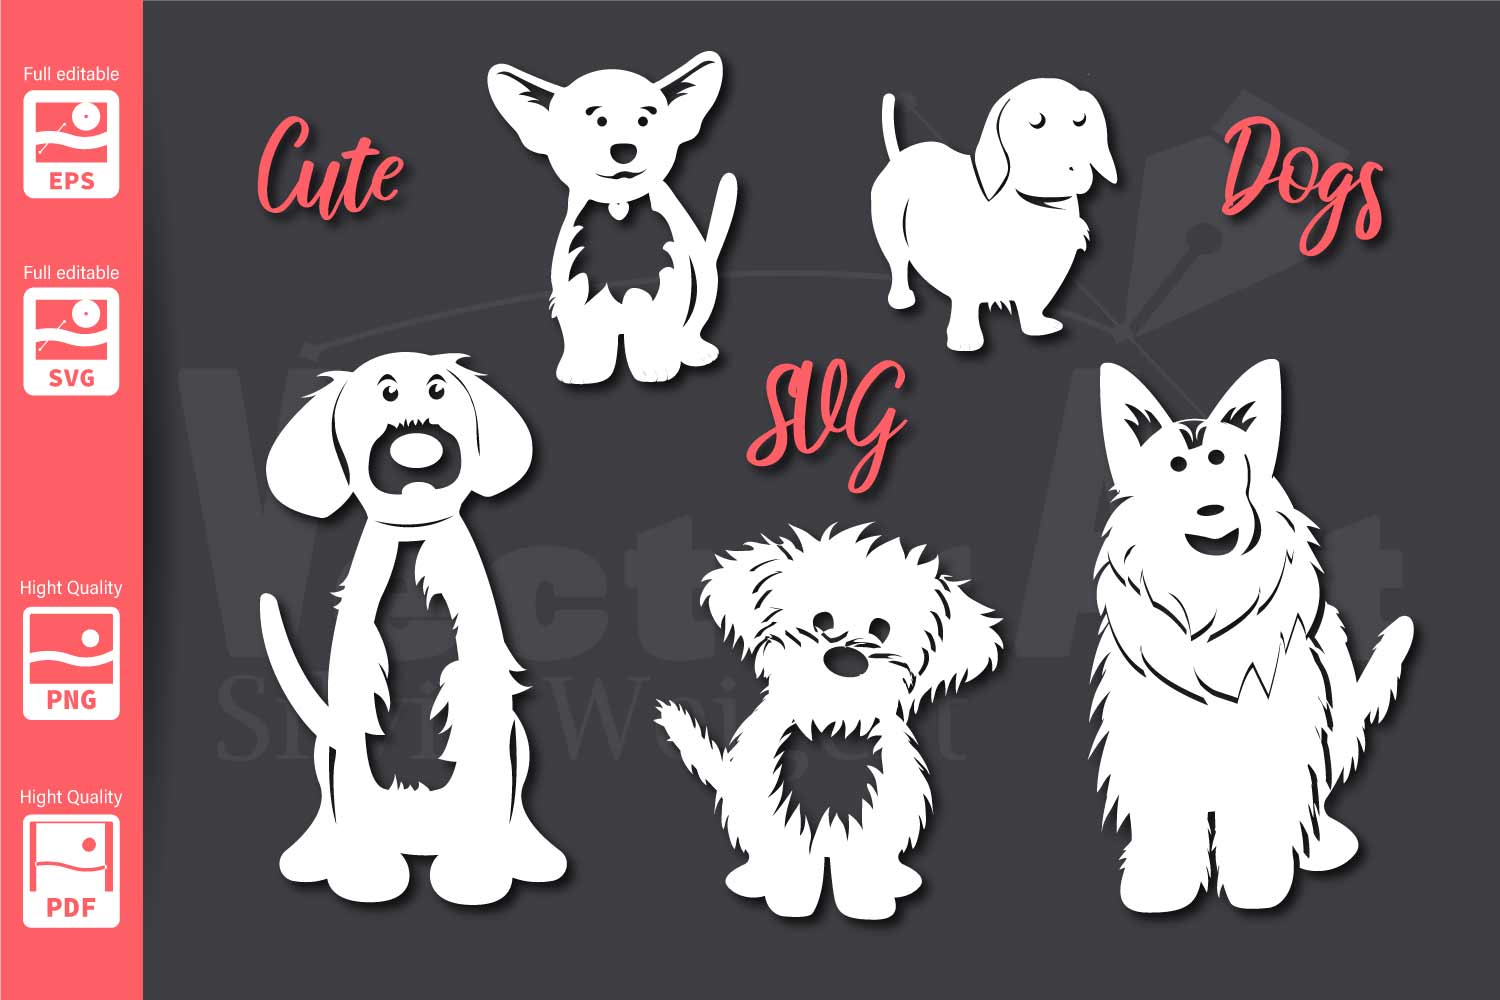 Download 5 Cute Dogs - SVG - Cut Files for Beginners (190019) | Cut Files | Design Bundles